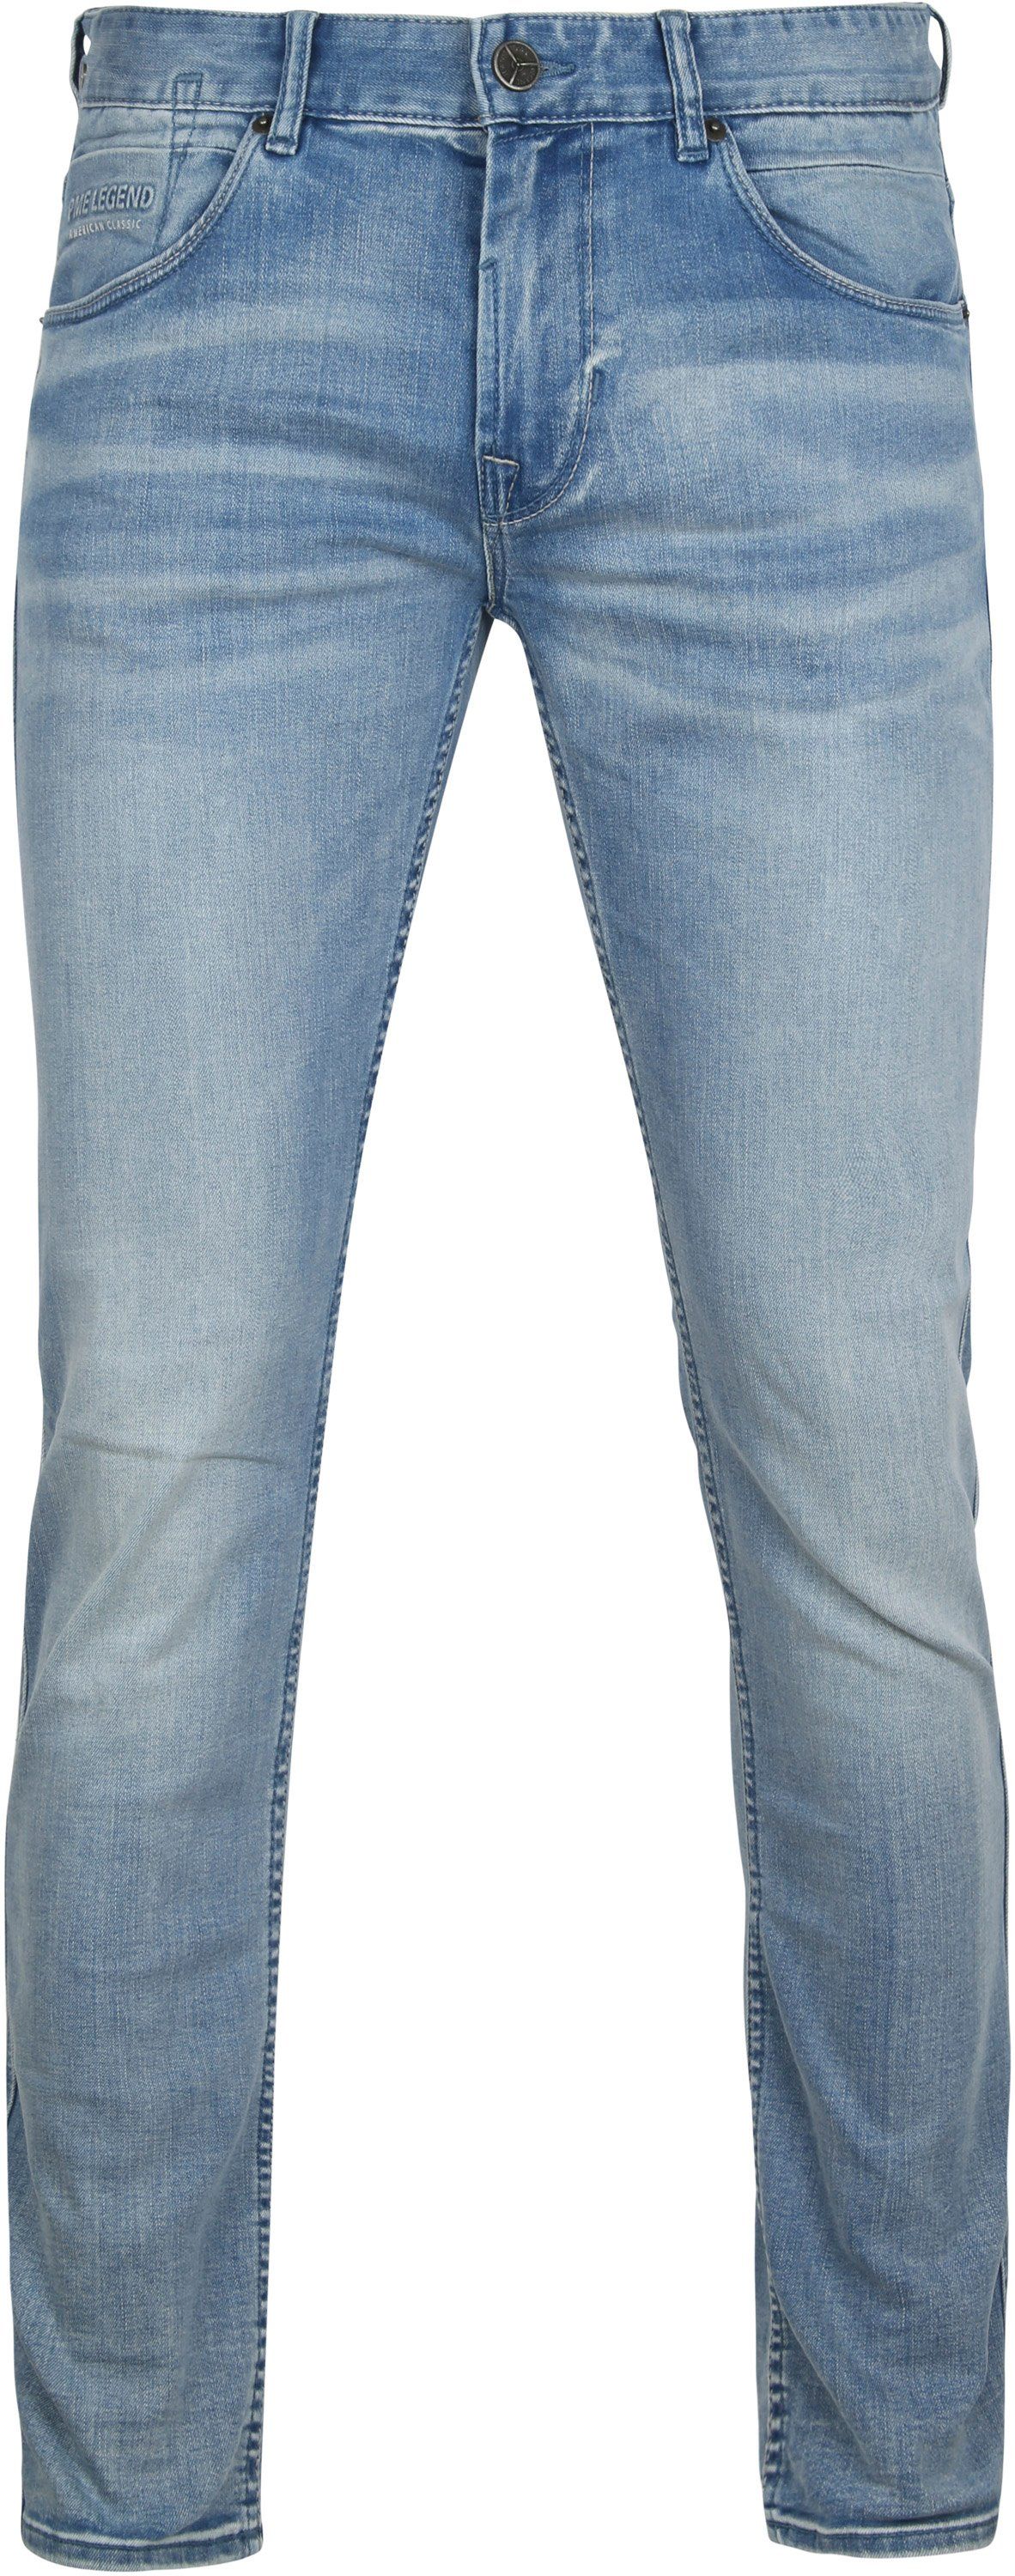 PME Legend Nightflight Jeans Blue size W 32